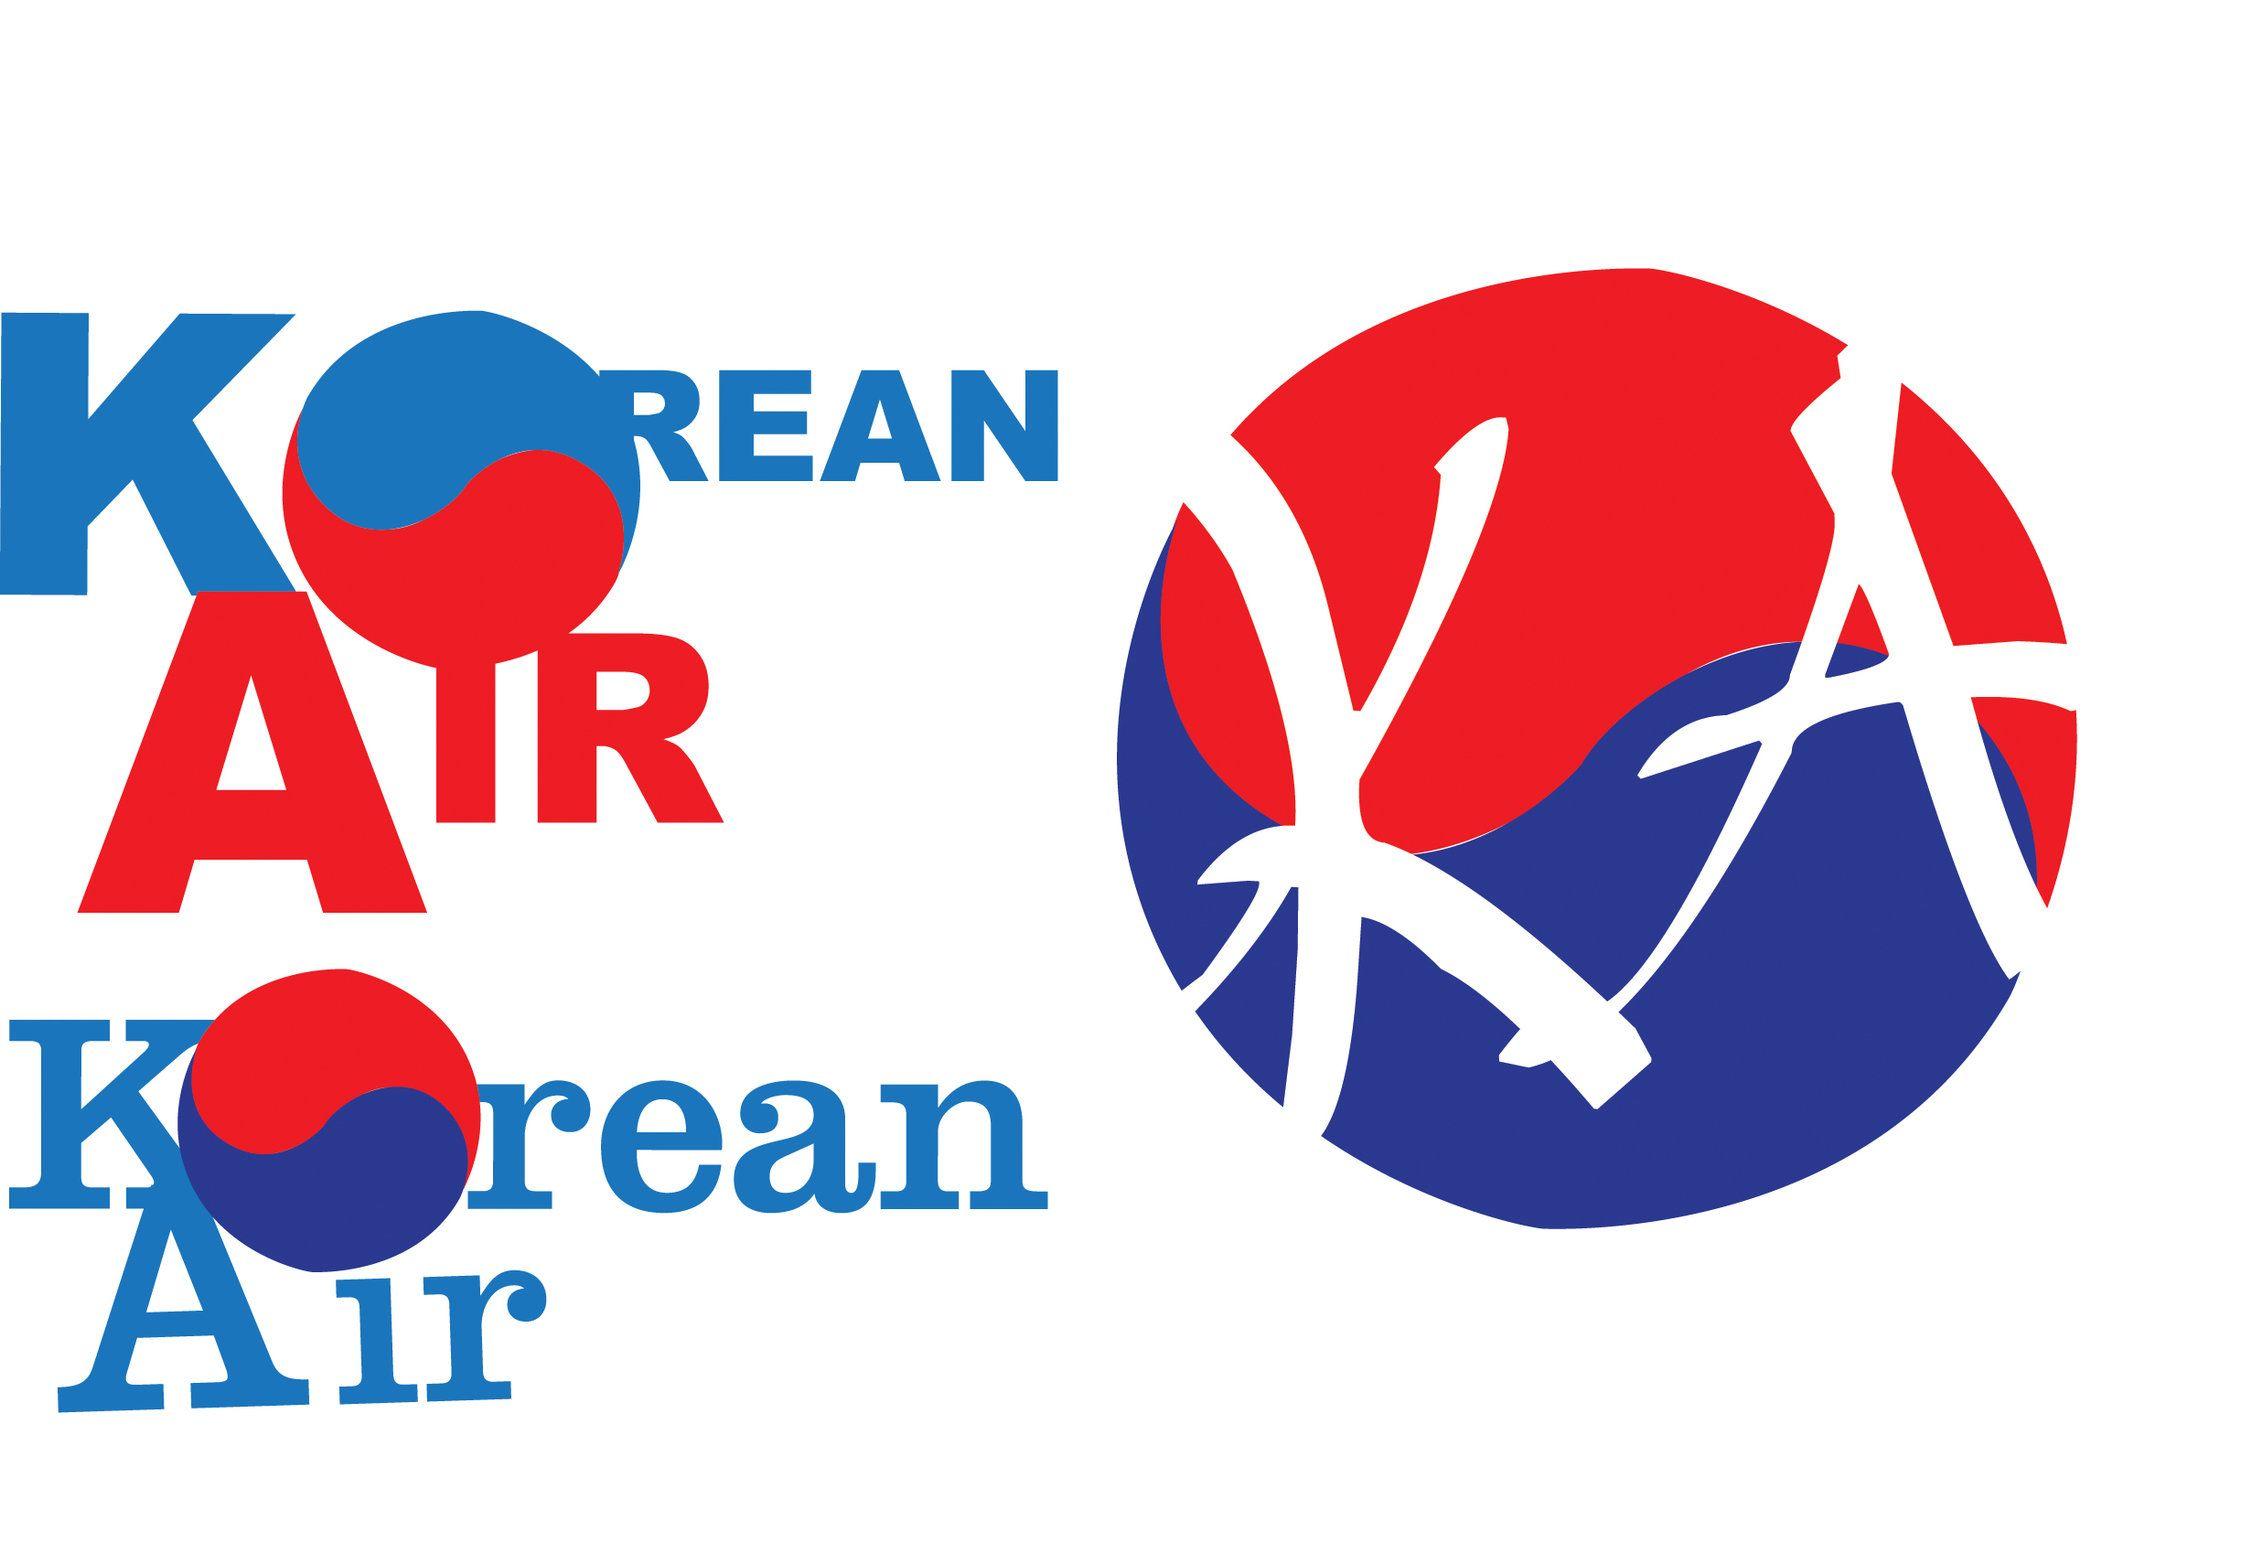 Korean Airlines Logo - Korean Air Logo Roughs3 by FreeTheCows on DeviantArt